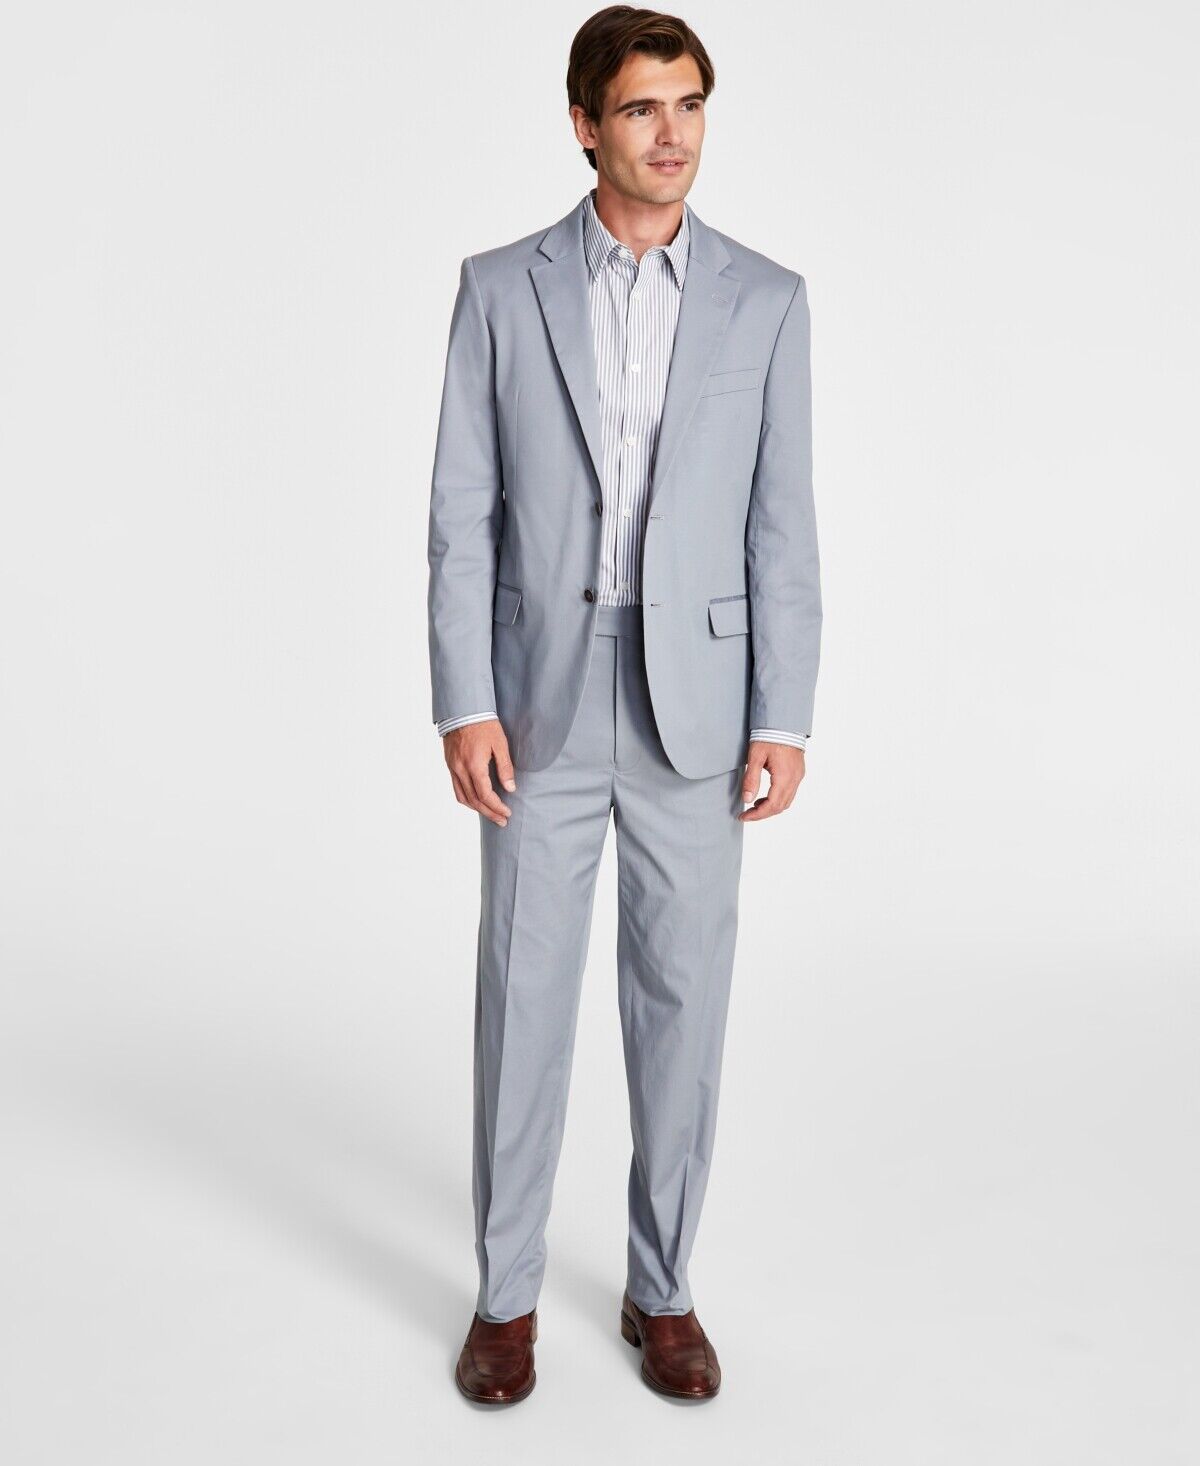 Nautica Men\'s Modern-Fit Stretch Cotton Solid Suit Grey 38R 32 x 32